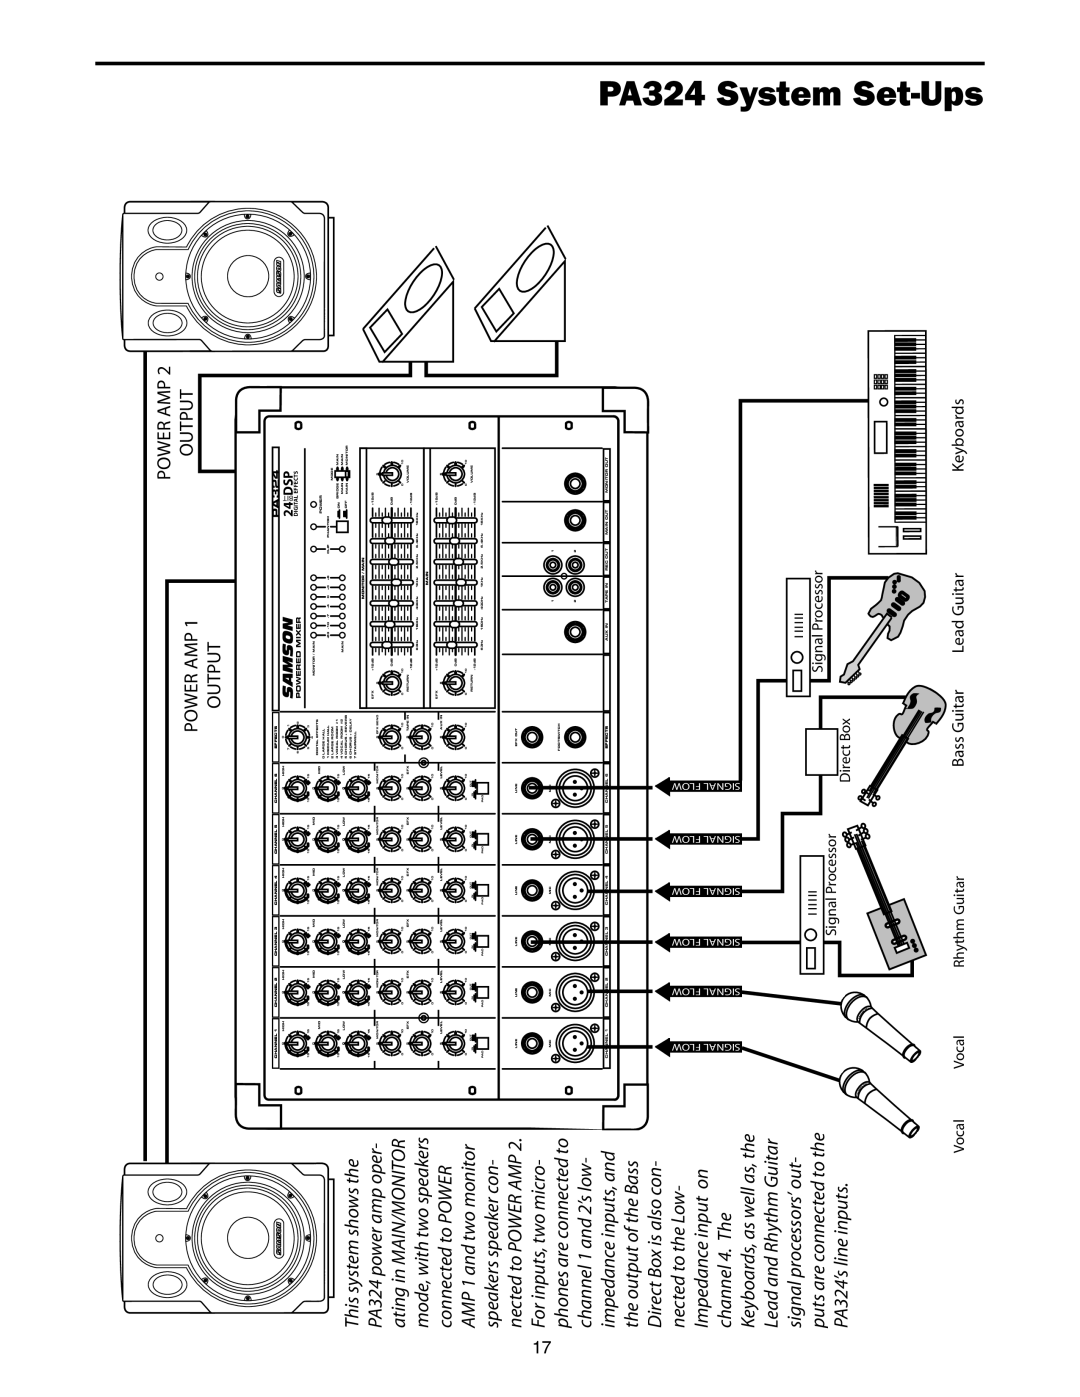 Samson PA324 System Set-Ups, POWER AMP POWER AMP 1OUTPUT OUTPUT, Bass Guitar, Lead Guitar, Samson, Vocal, Rhythm Guitar 